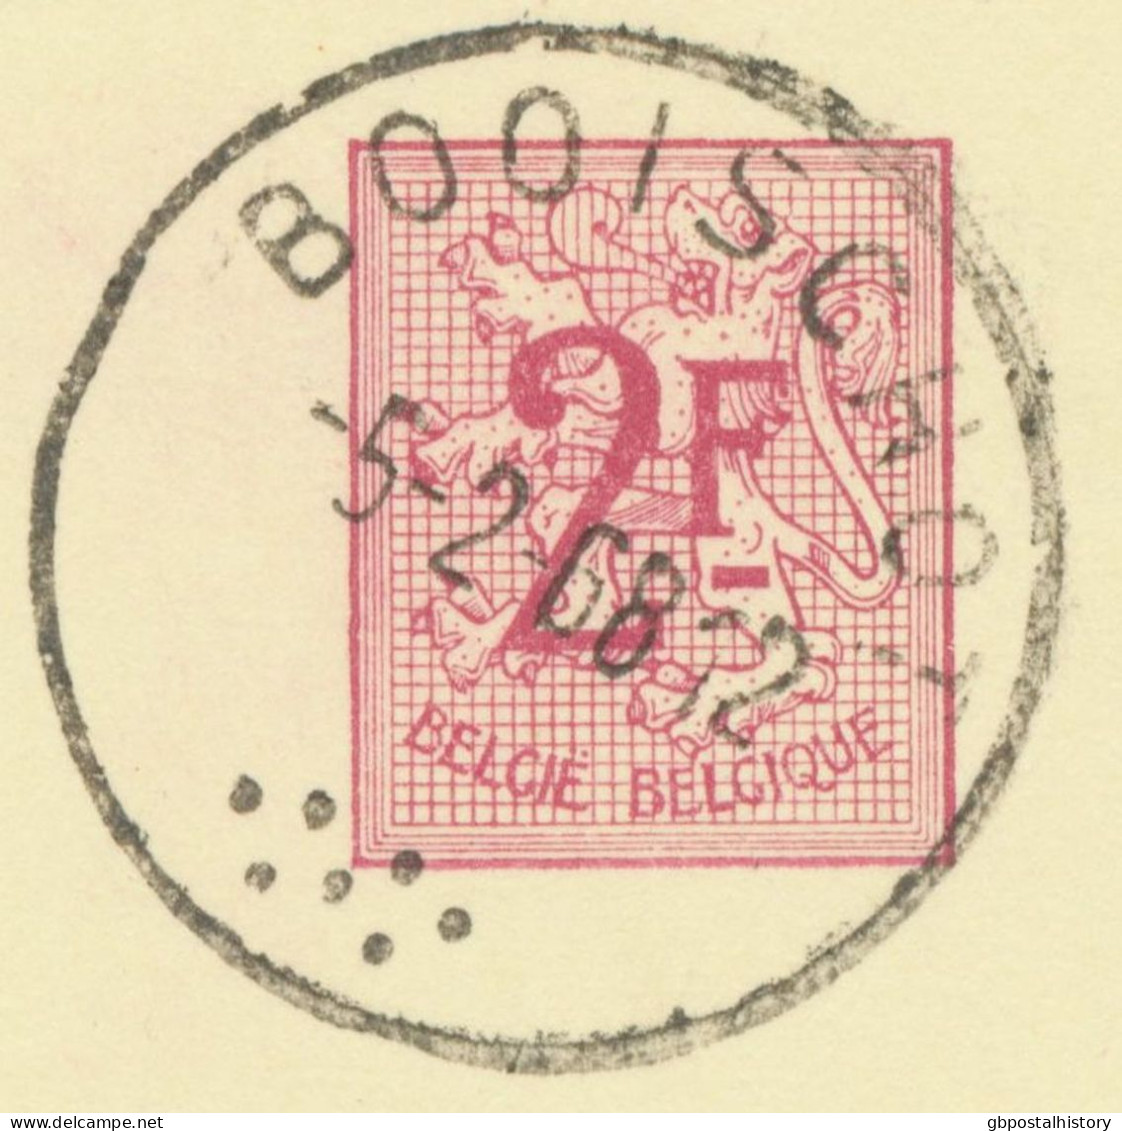 BELGIUM VILLAGE POSTMARKS  BOOISCHOT (now Heist-op-den-Berg) SC With Dots 1968 (Postal Stationery 2 F, PUBLIBEL 2237 V.) - Punktstempel